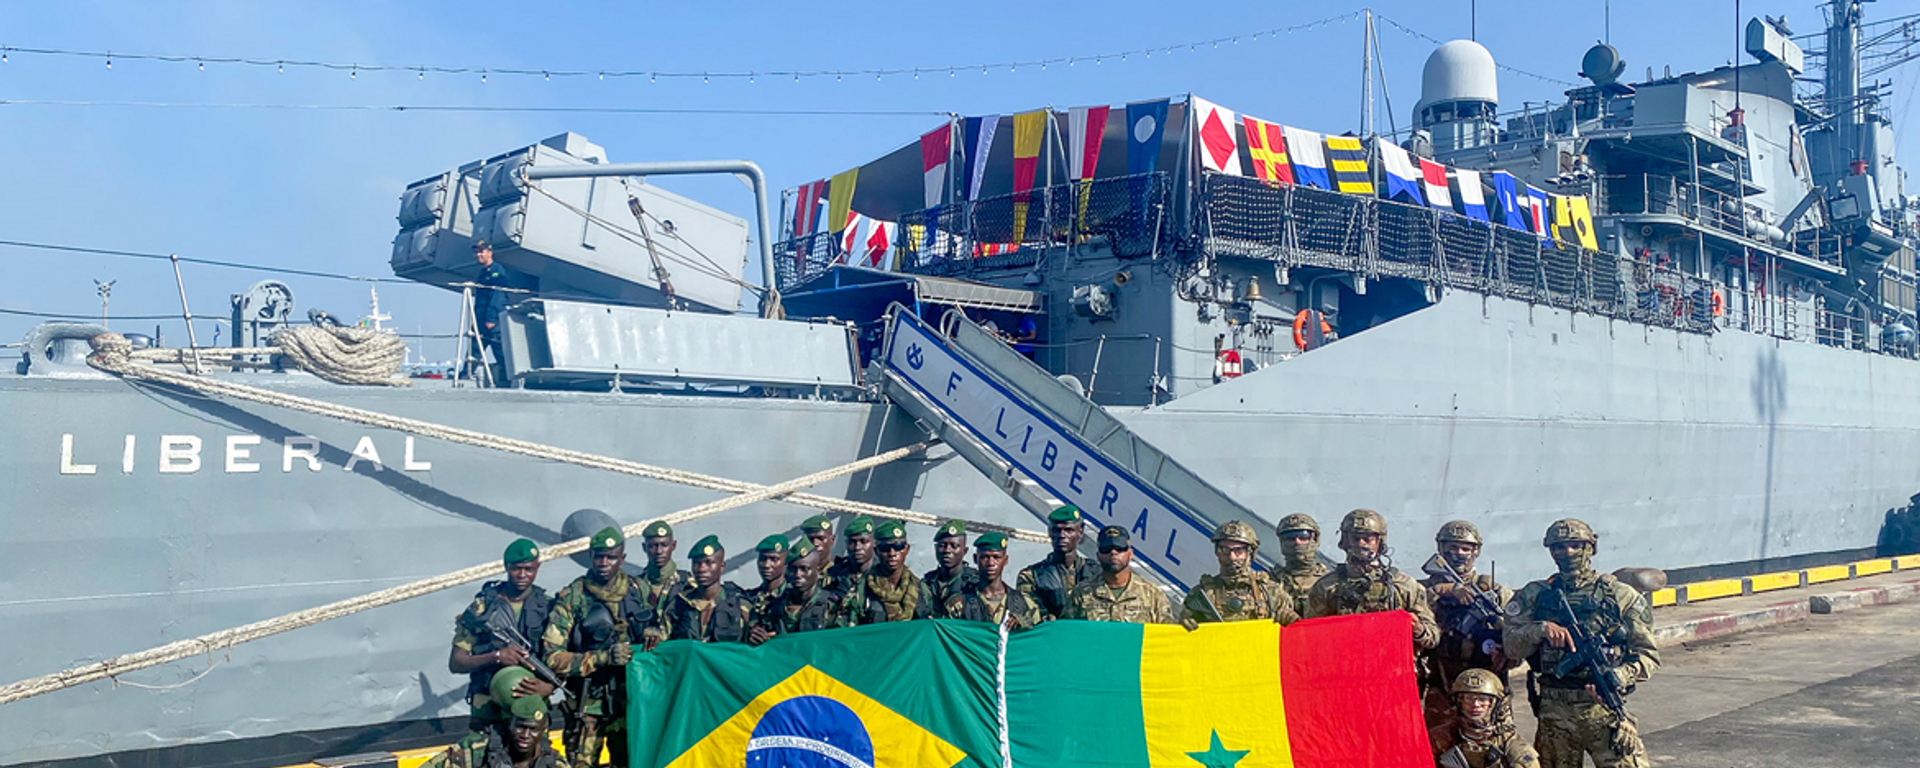 Fragata Liberal da Marinha do Brasil realiza visita ao porto de Dacar, no Senegal, 23 de setembro 2023 - Sputnik Brasil, 1920, 30.09.2023